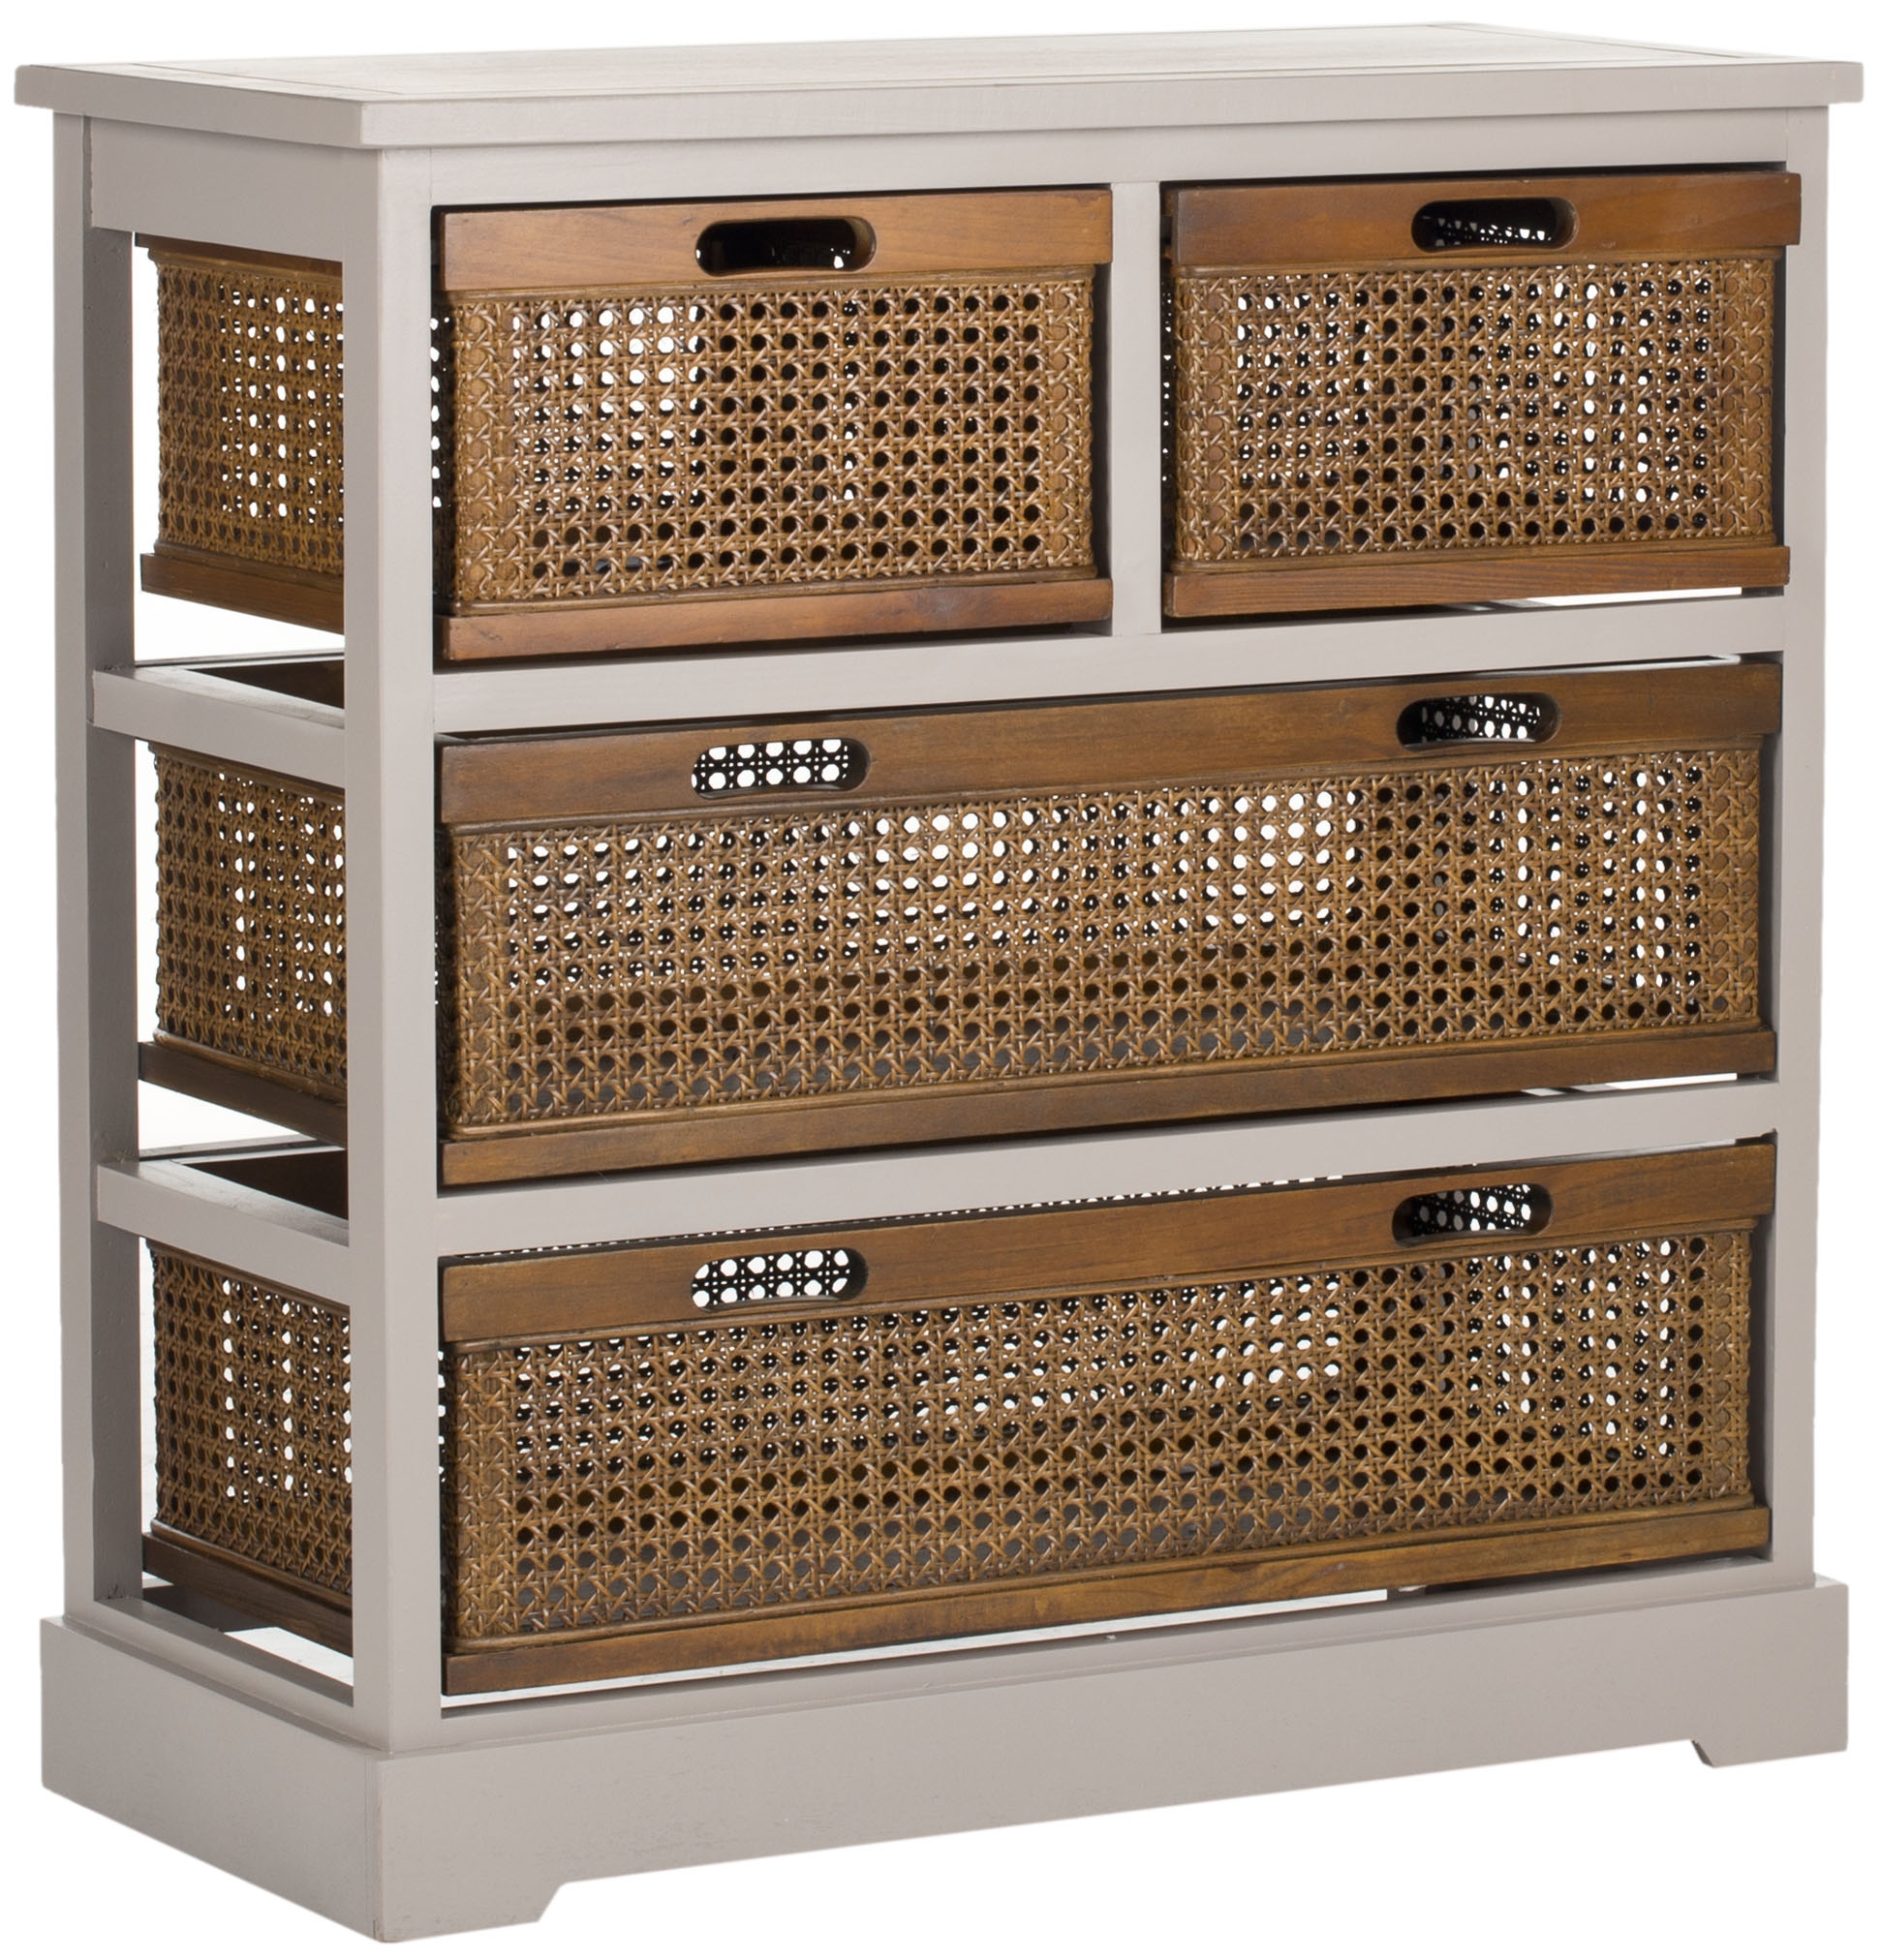 Jackson 4 Drawer Storage Unit - Quartz Grey/Cane - Arlo Home - Image 1